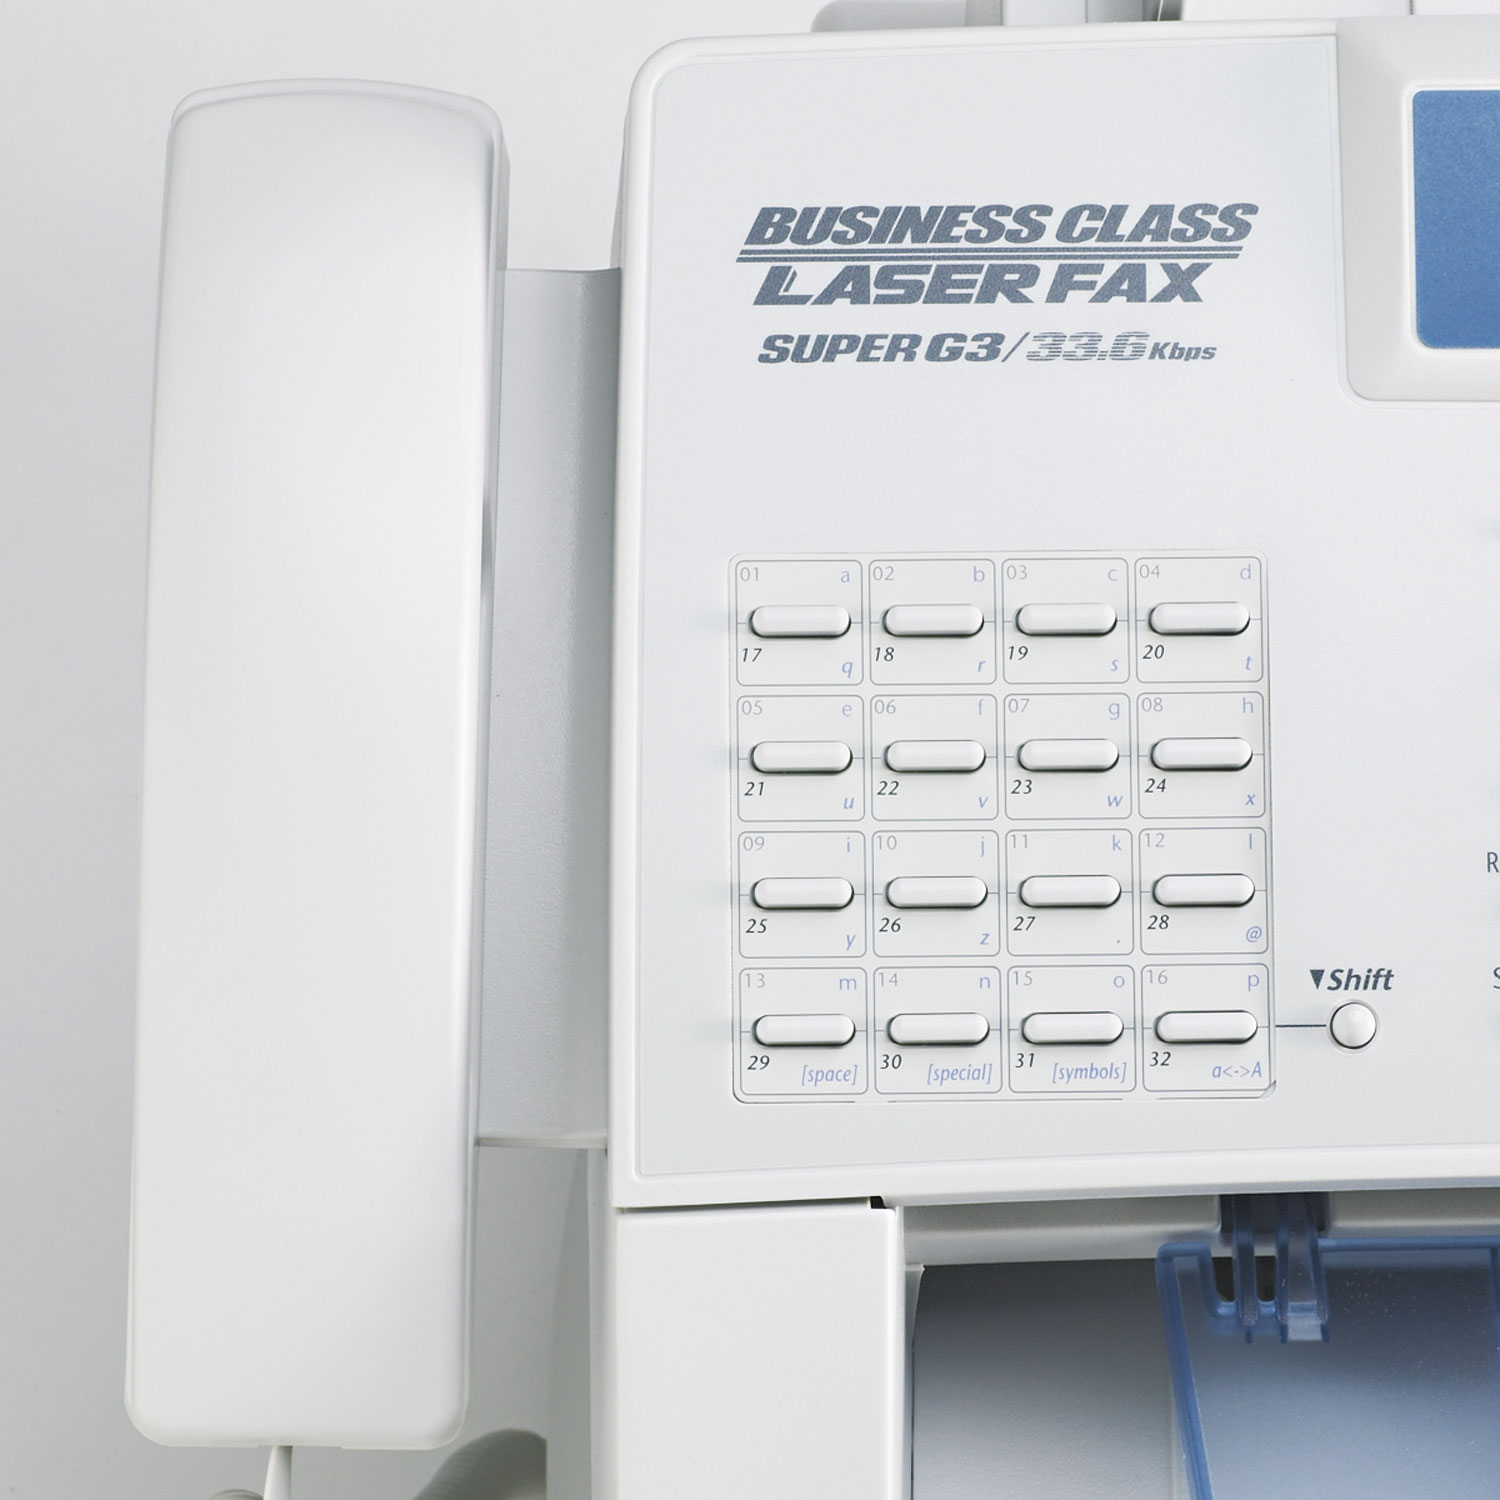 intelliFAX-5750e Business-Class Laser Fax Machine, Copy/Fax/Print